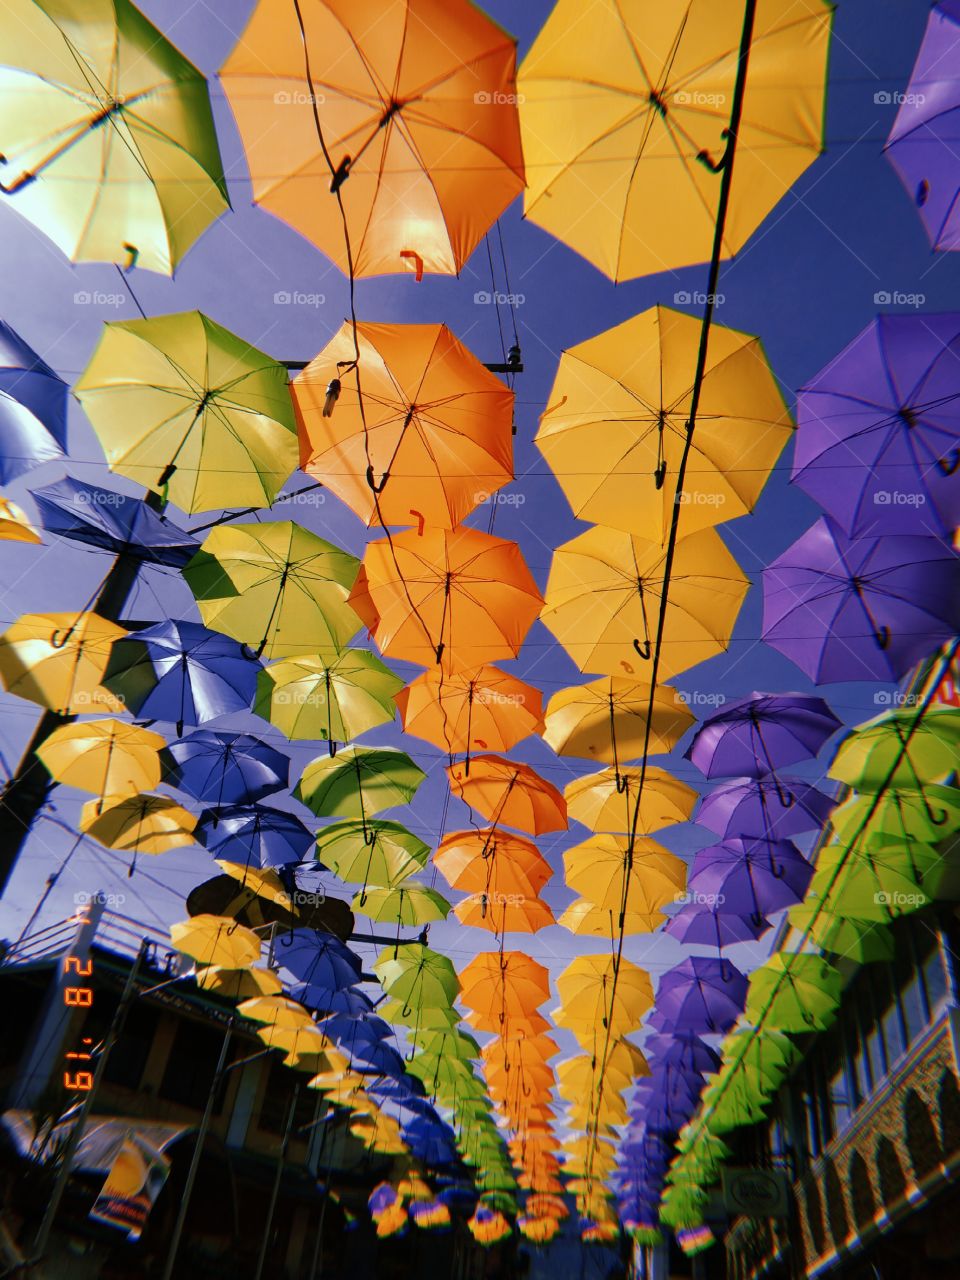 Umbrella Festival